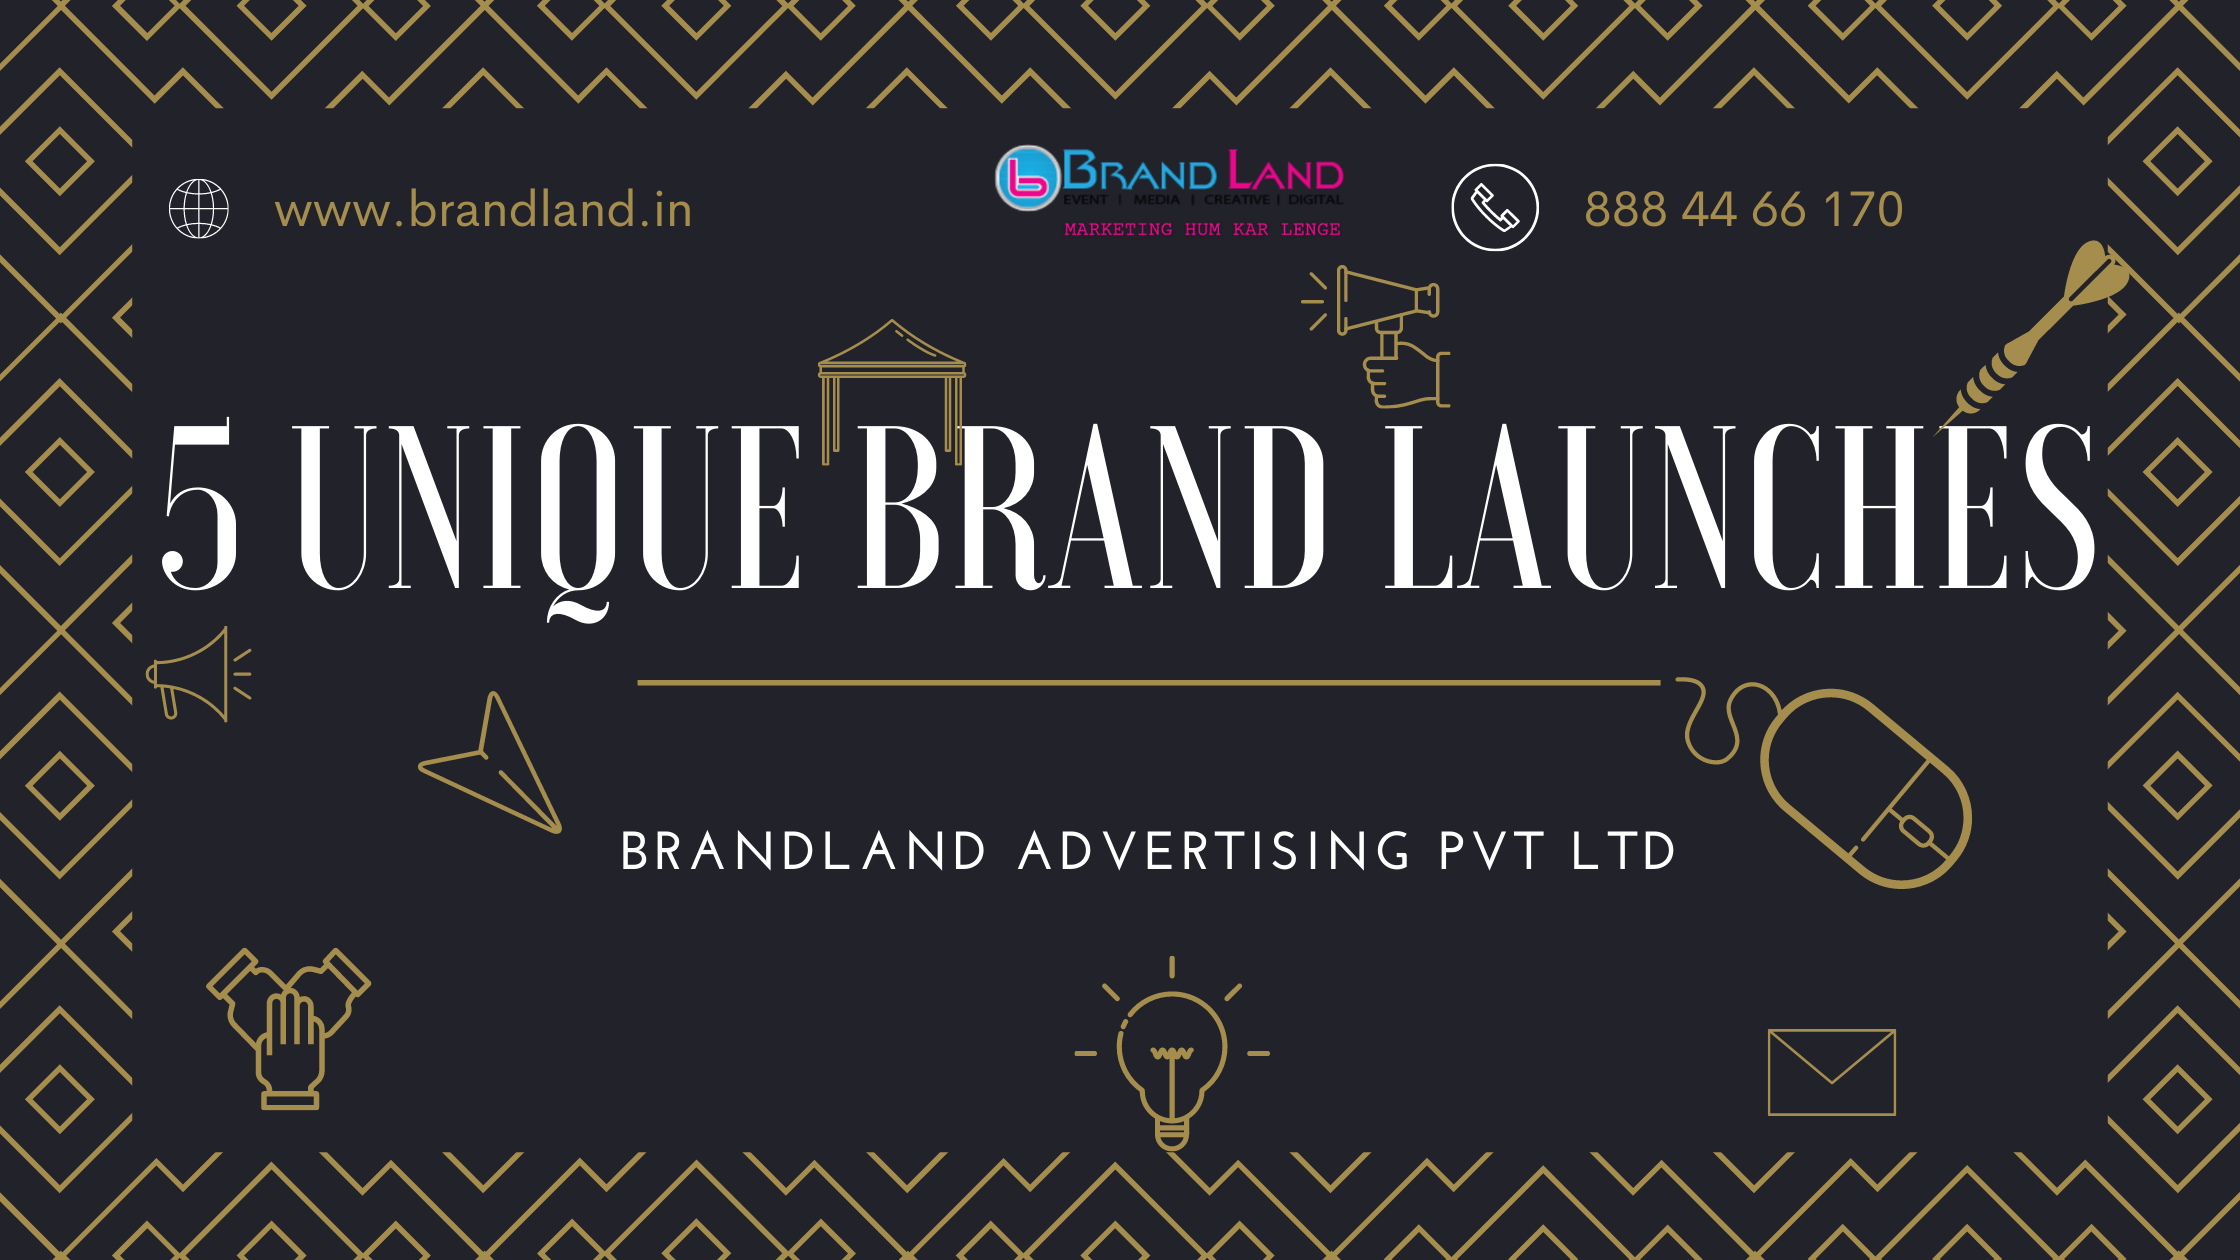 Brand launch